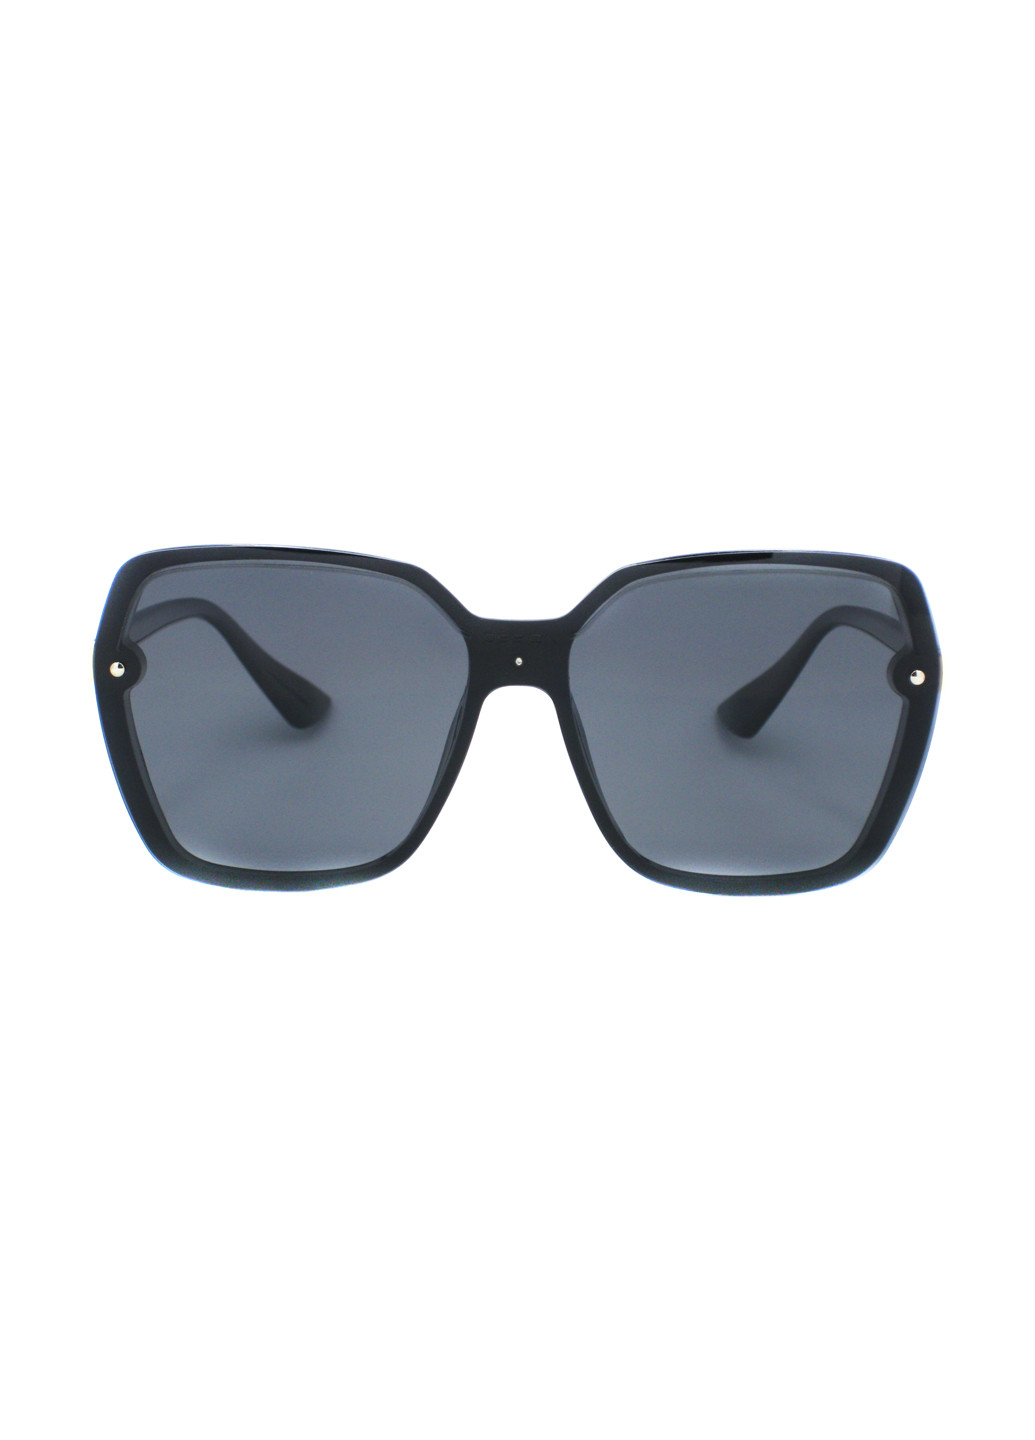 Cолнцезащитные очки Boccaccio bcp3973 01 (188291432)